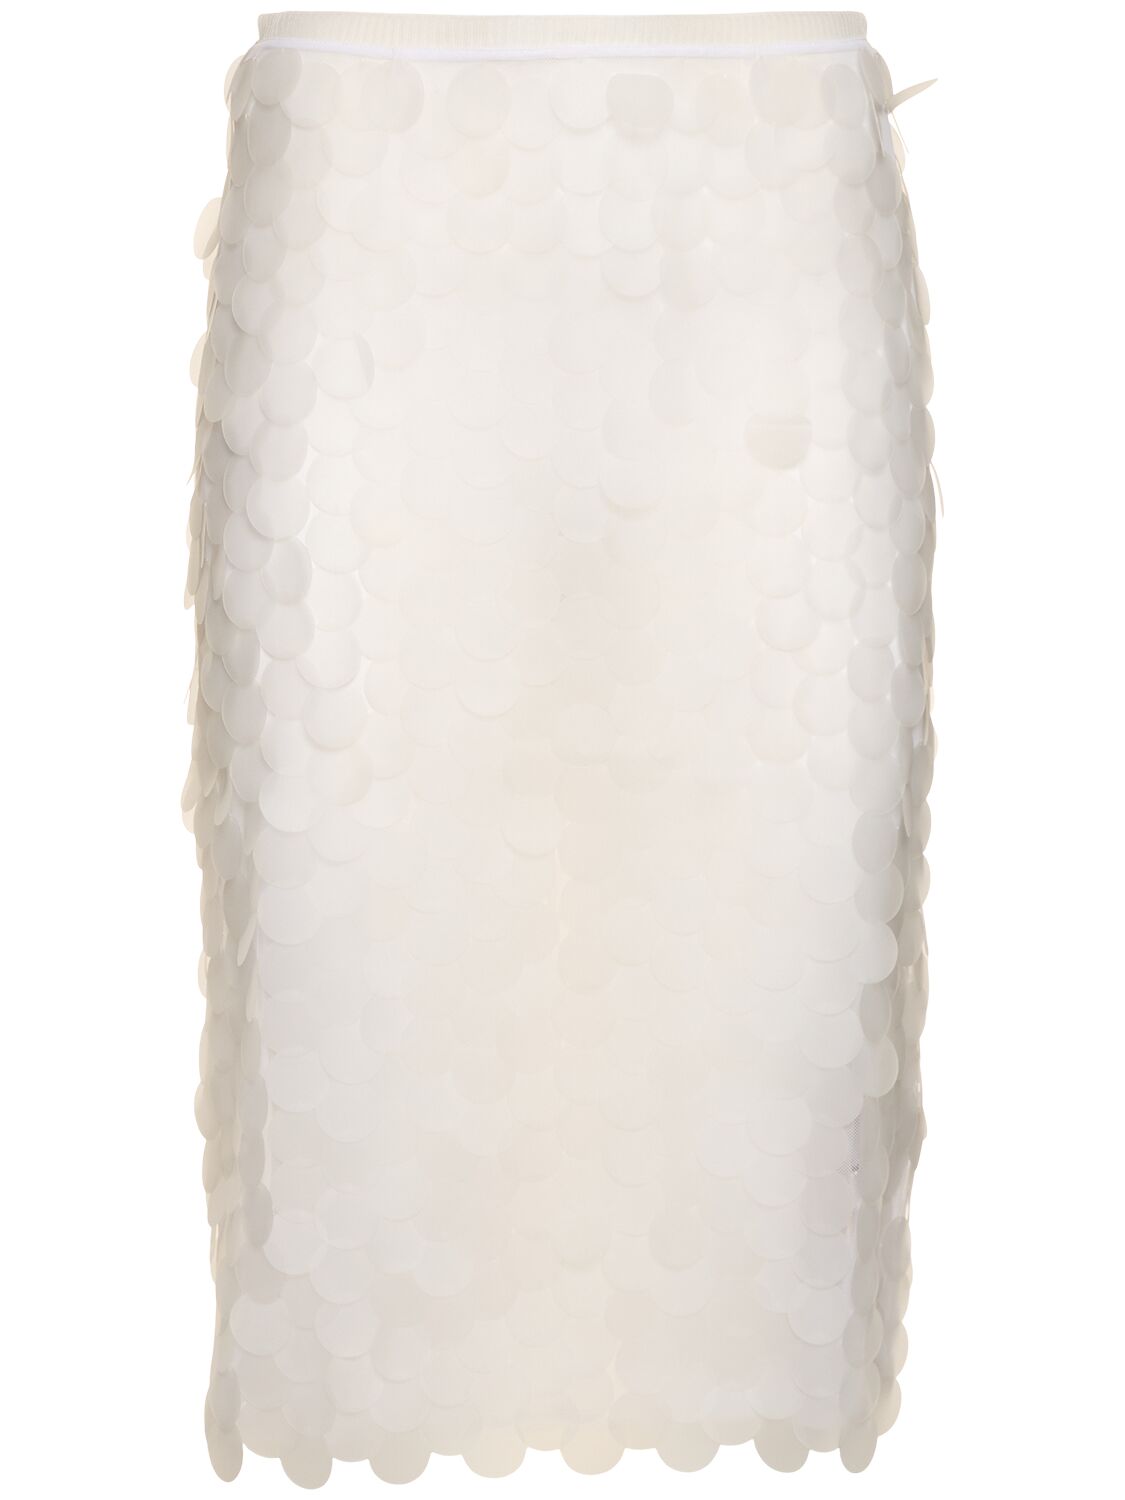 16arlington Delta Round Sequined Skirt In White